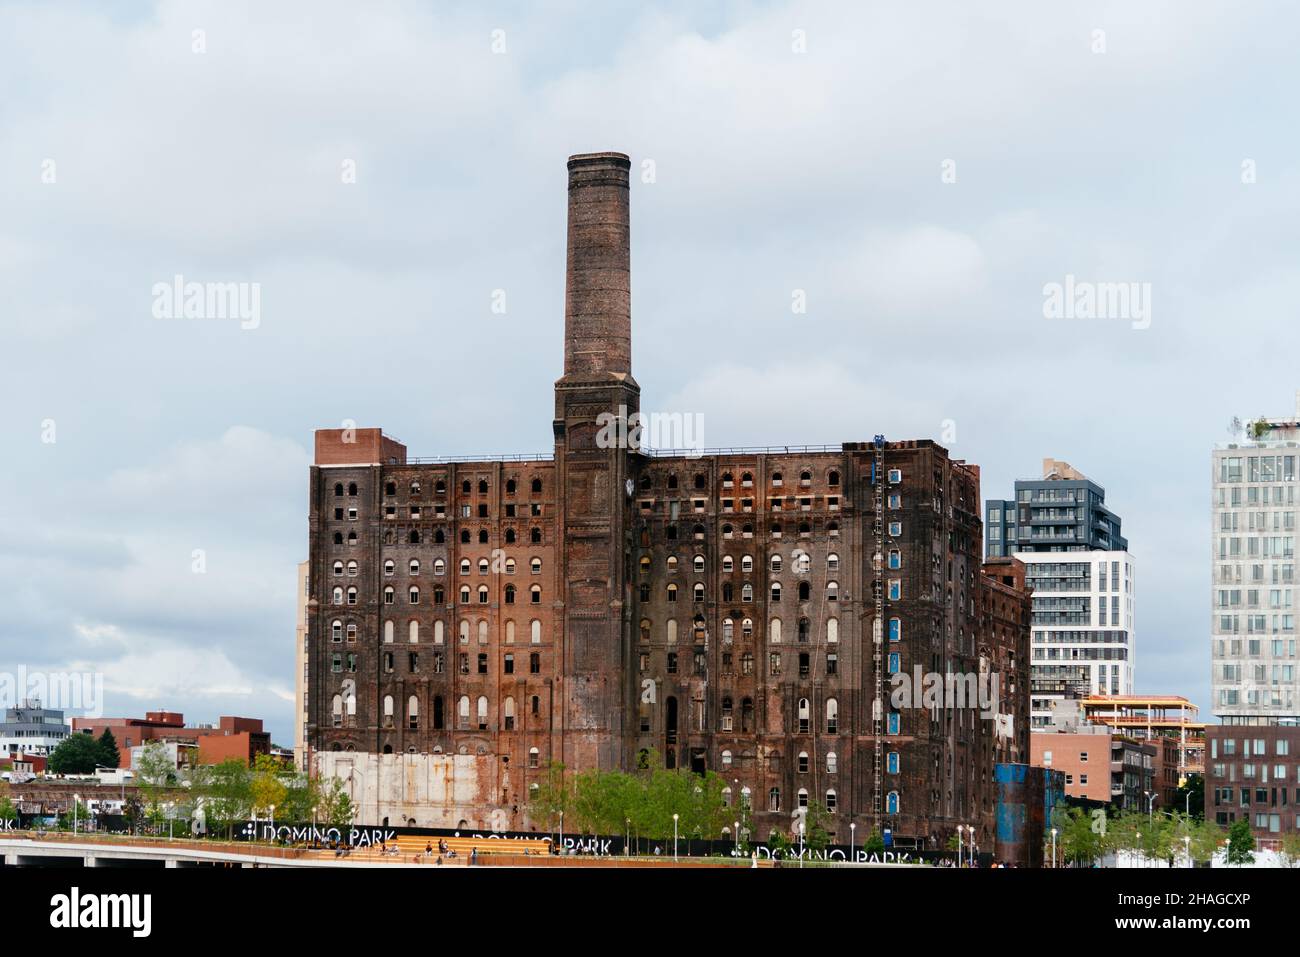 New York City, USA - 23. Juni 2018: Alte Zuckerfabrik im Domino Park in Williamsburg, Brooklyn Stockfoto